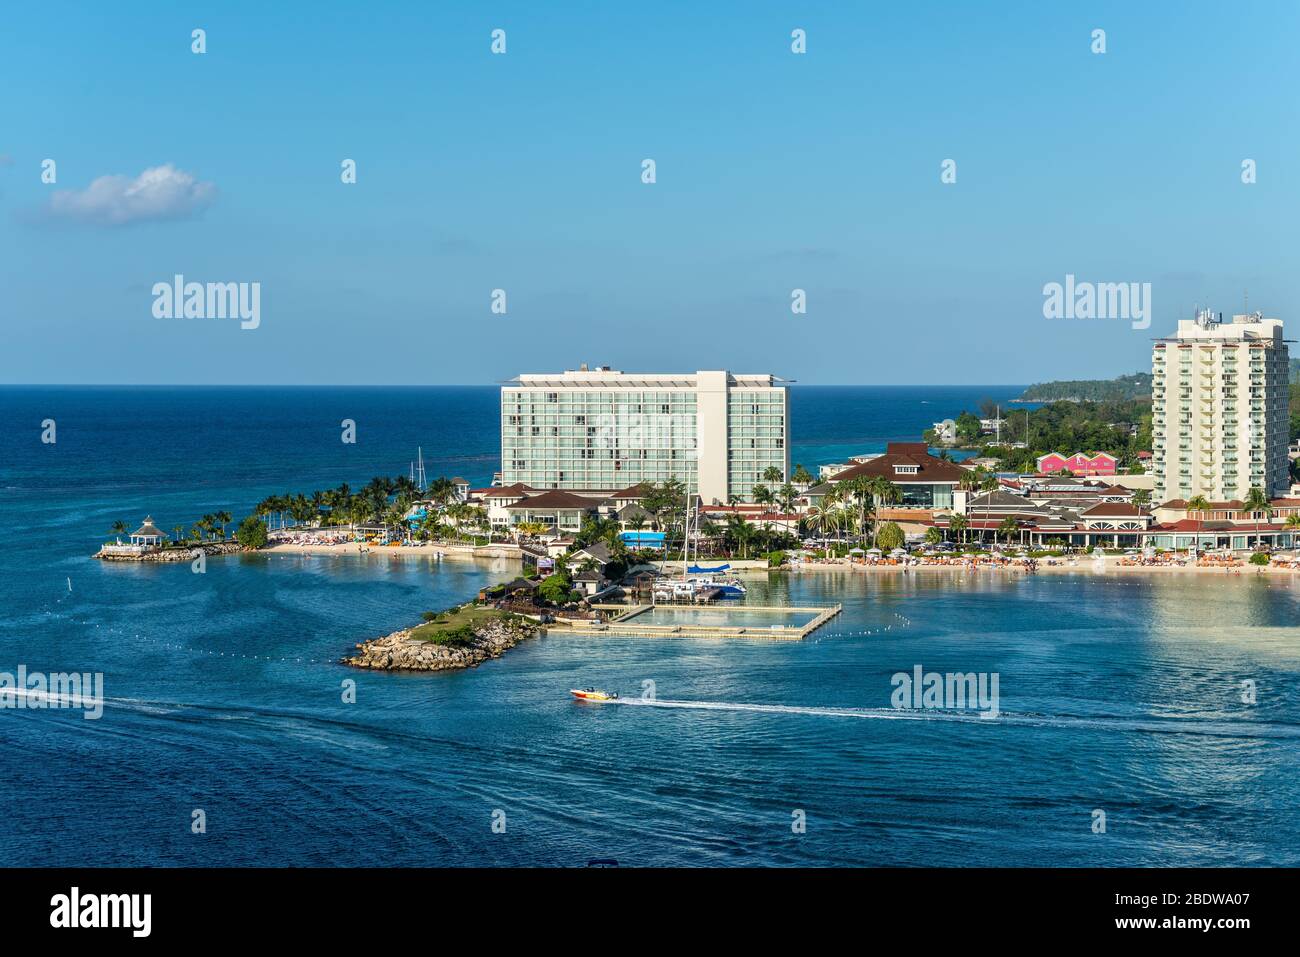 Ocho Rios, Jamaica - April 22, 2019: Coastline view with Dolphin Cove Moon Palace, in the tropical Caribbean island of Ocho Rios, Jamaica. Stock Photo